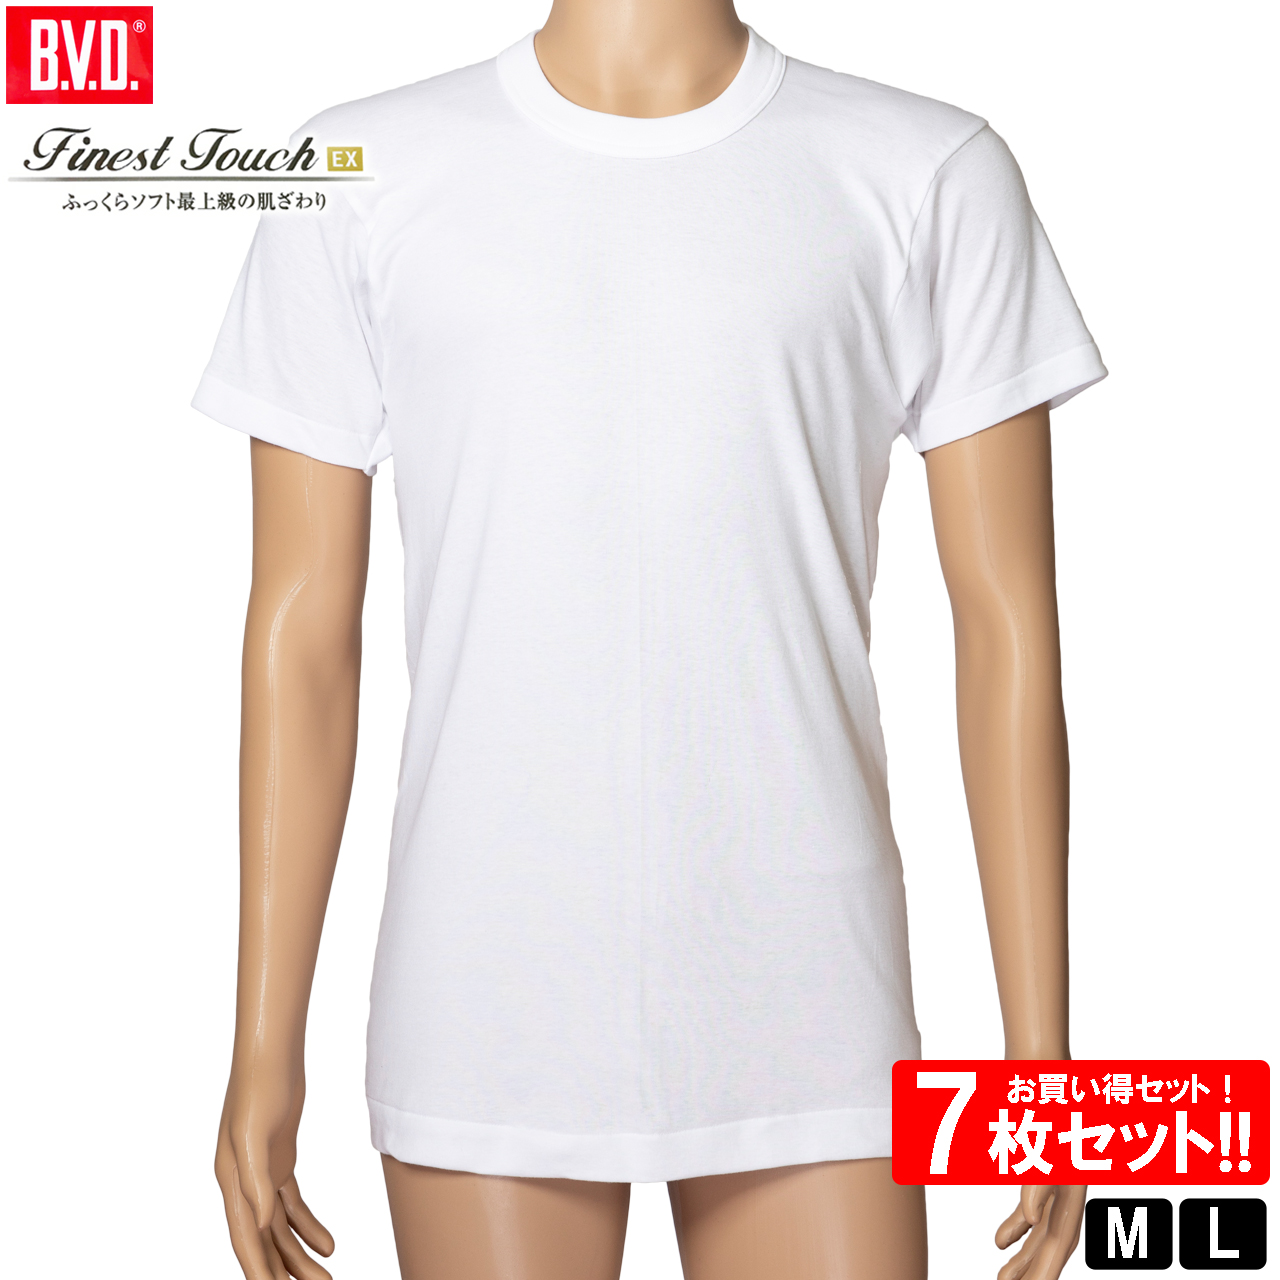 BVD Finest Touch EX 丸首半袖シャツ 7枚セット メンズ 肌着 インナー 男性 下...